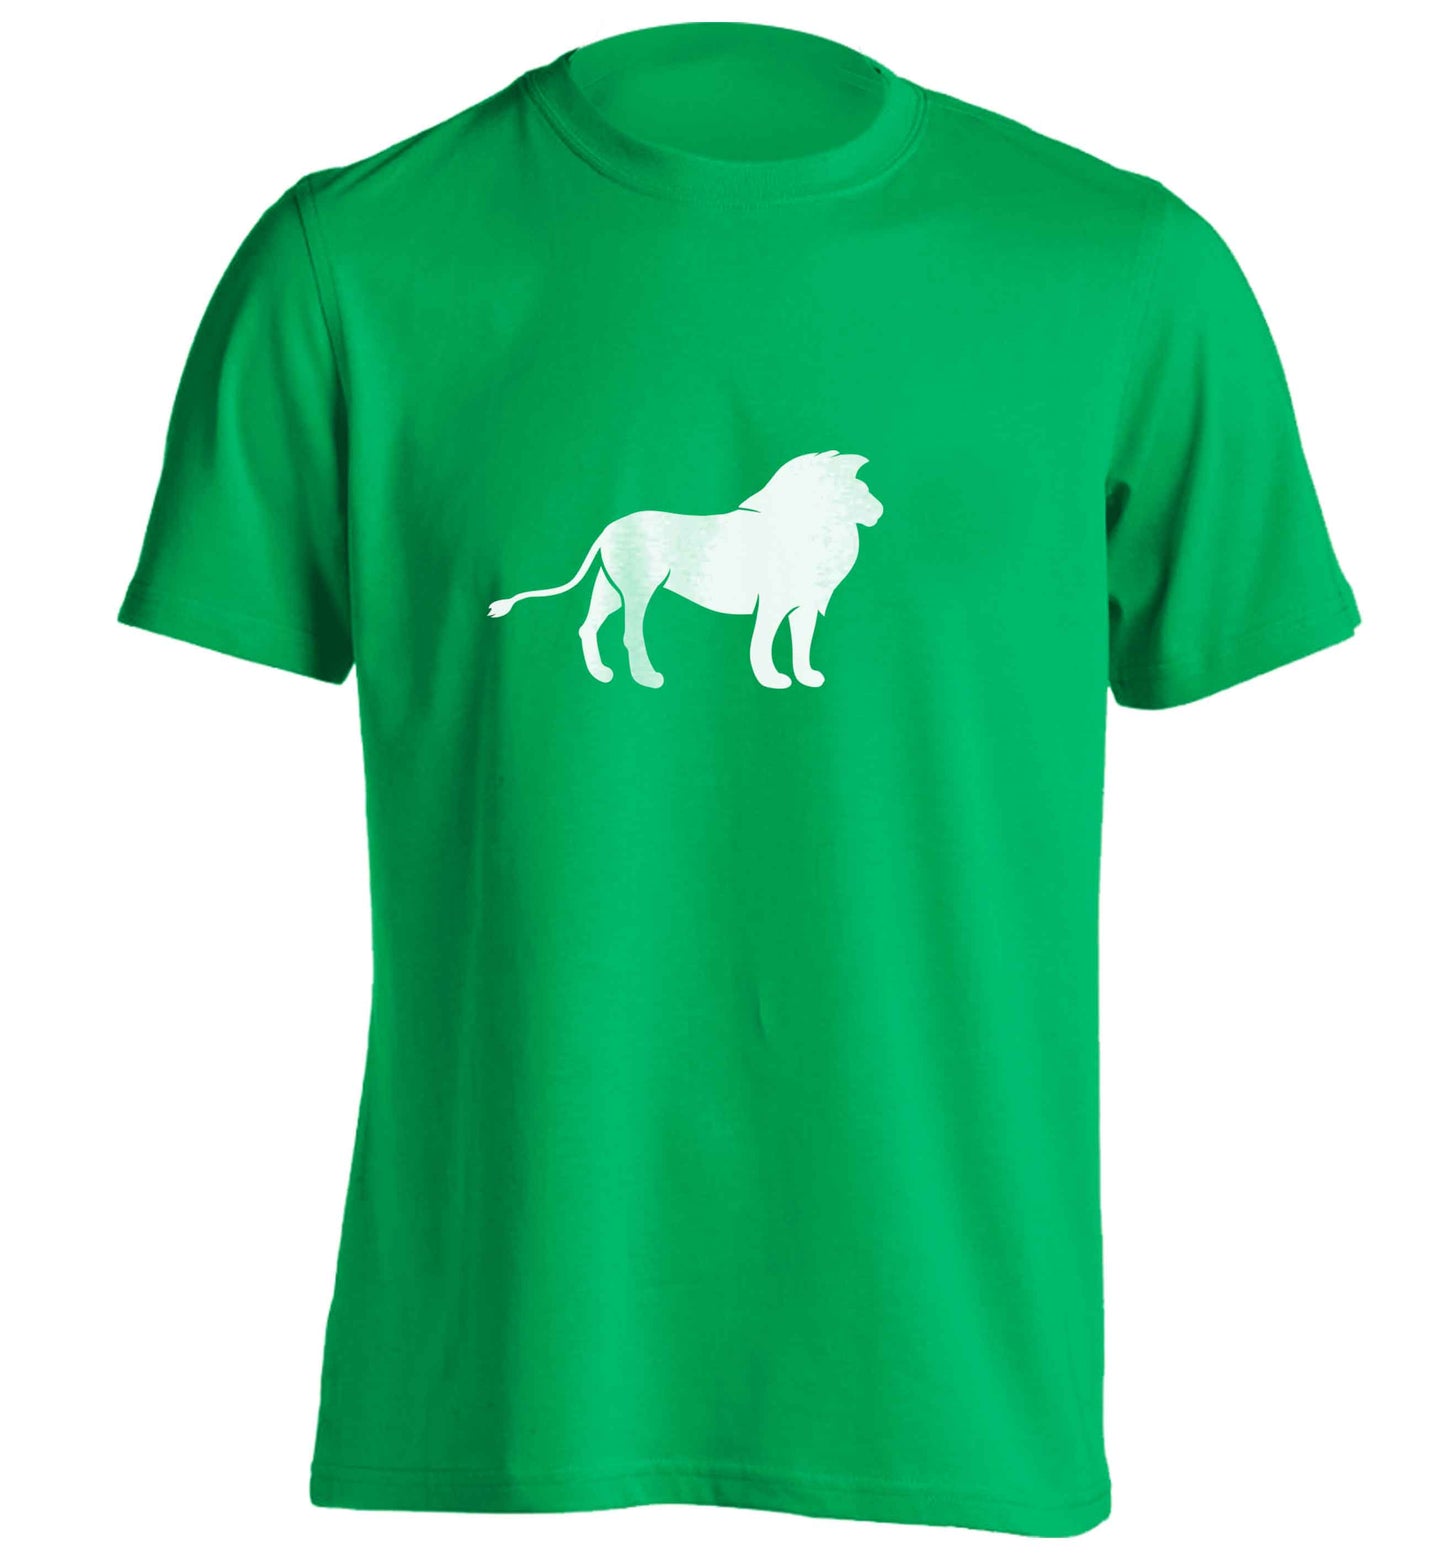 Gold lion adults unisex green Tshirt 2XL